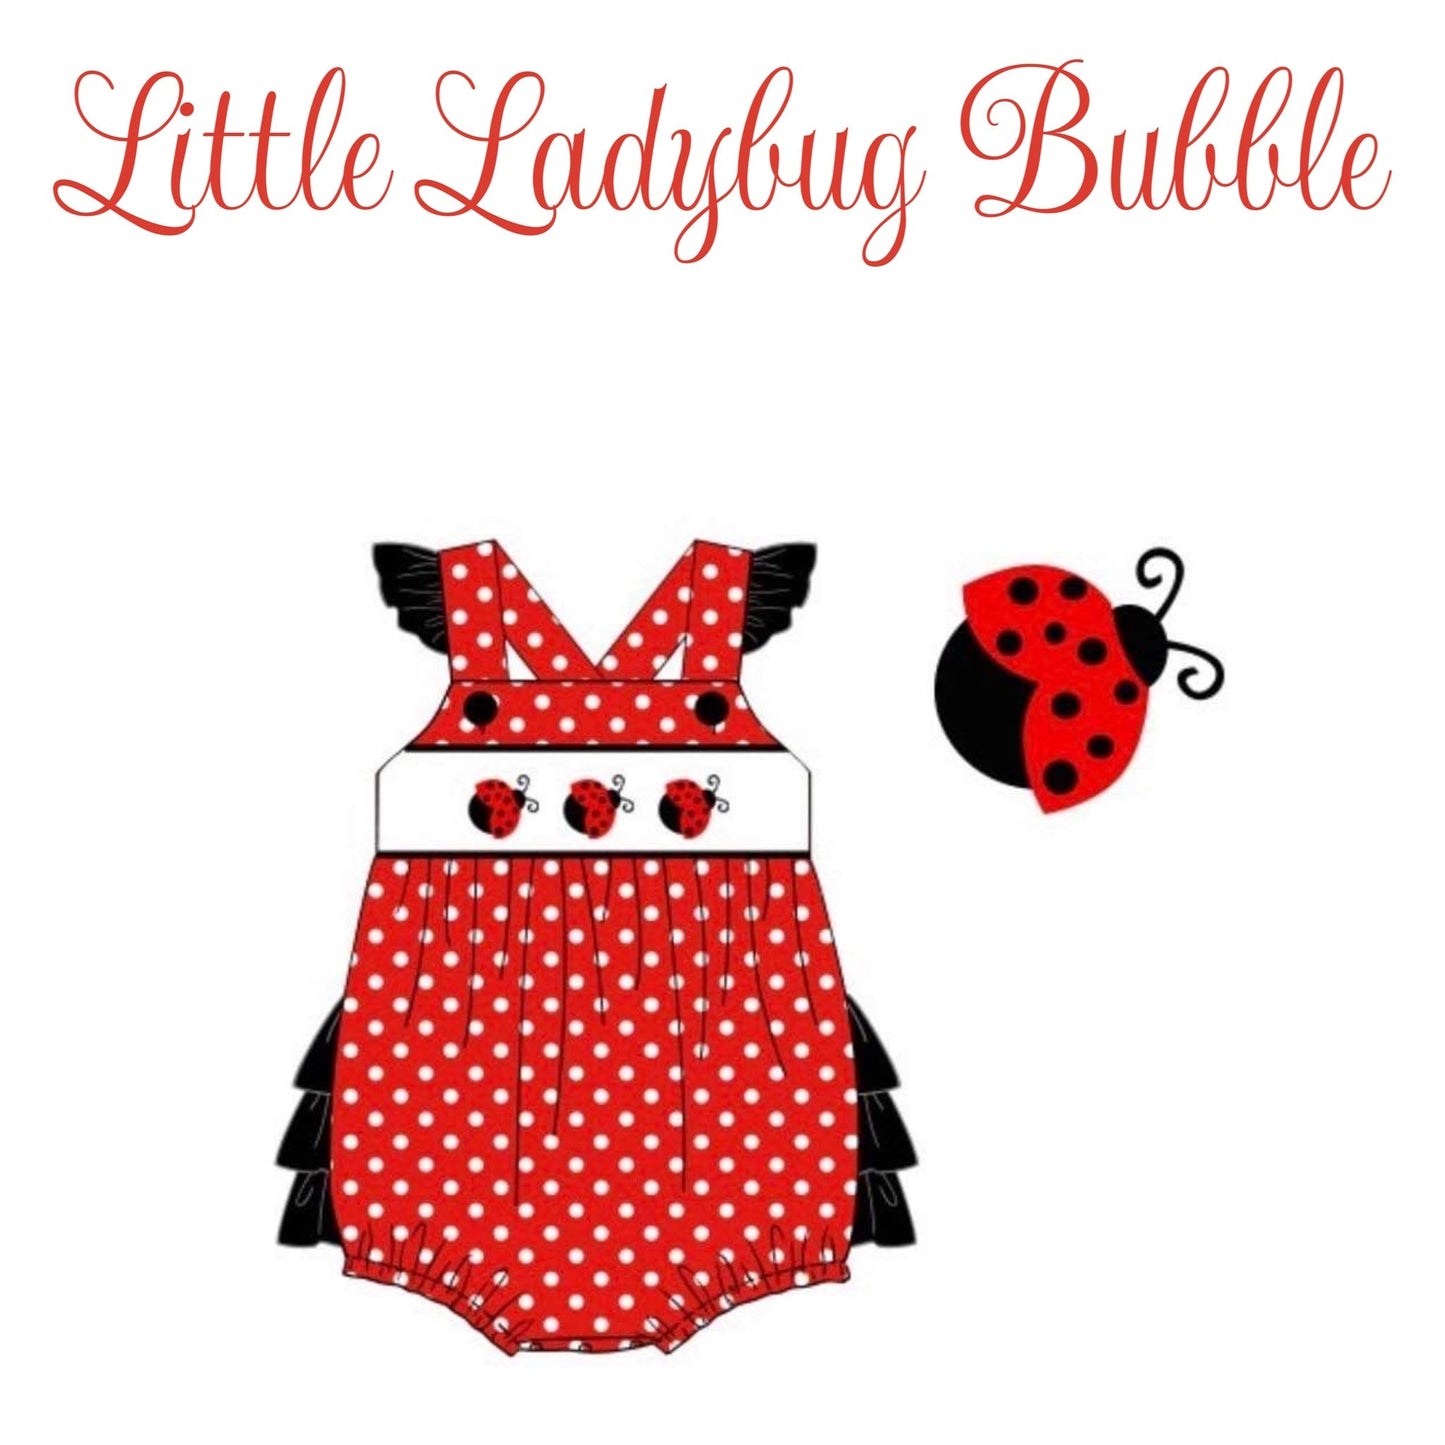 Little Lady Bug Bubble (RTS)